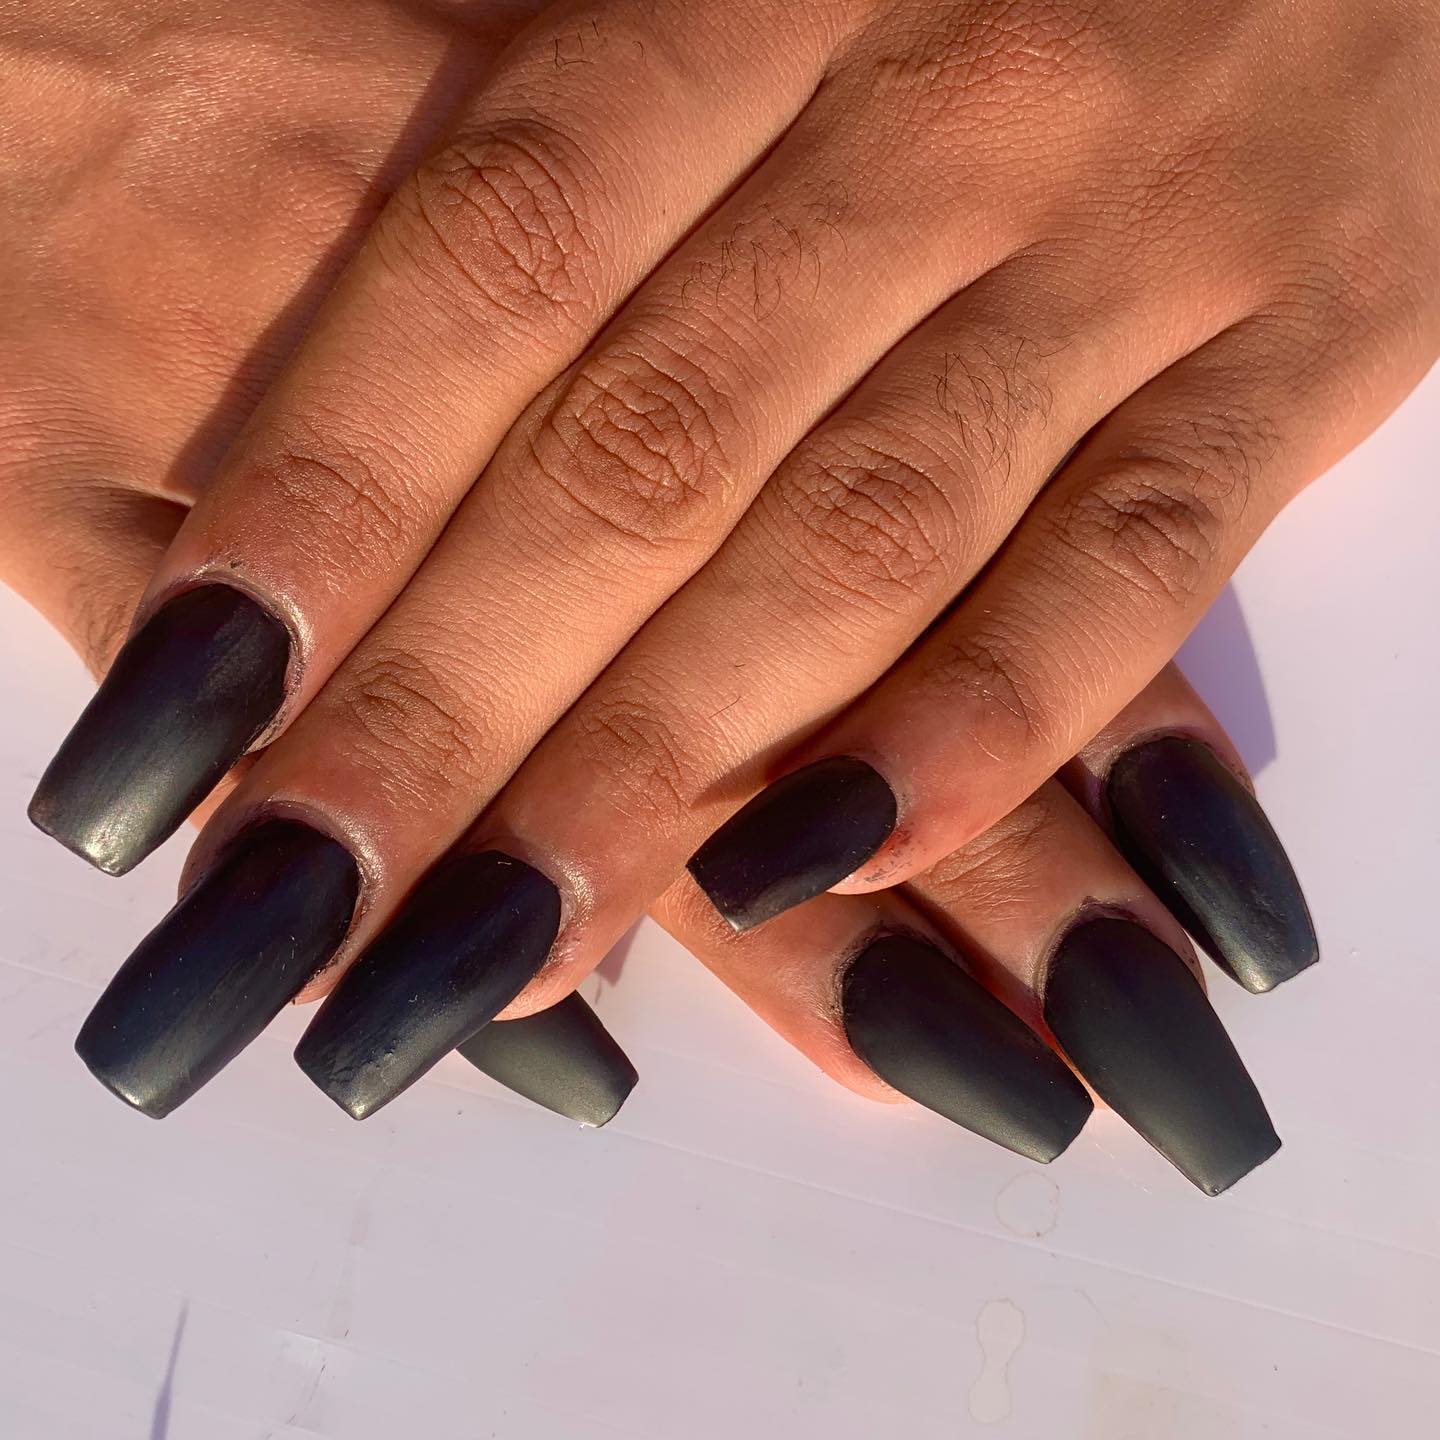 Matte Black Acrylic Nails